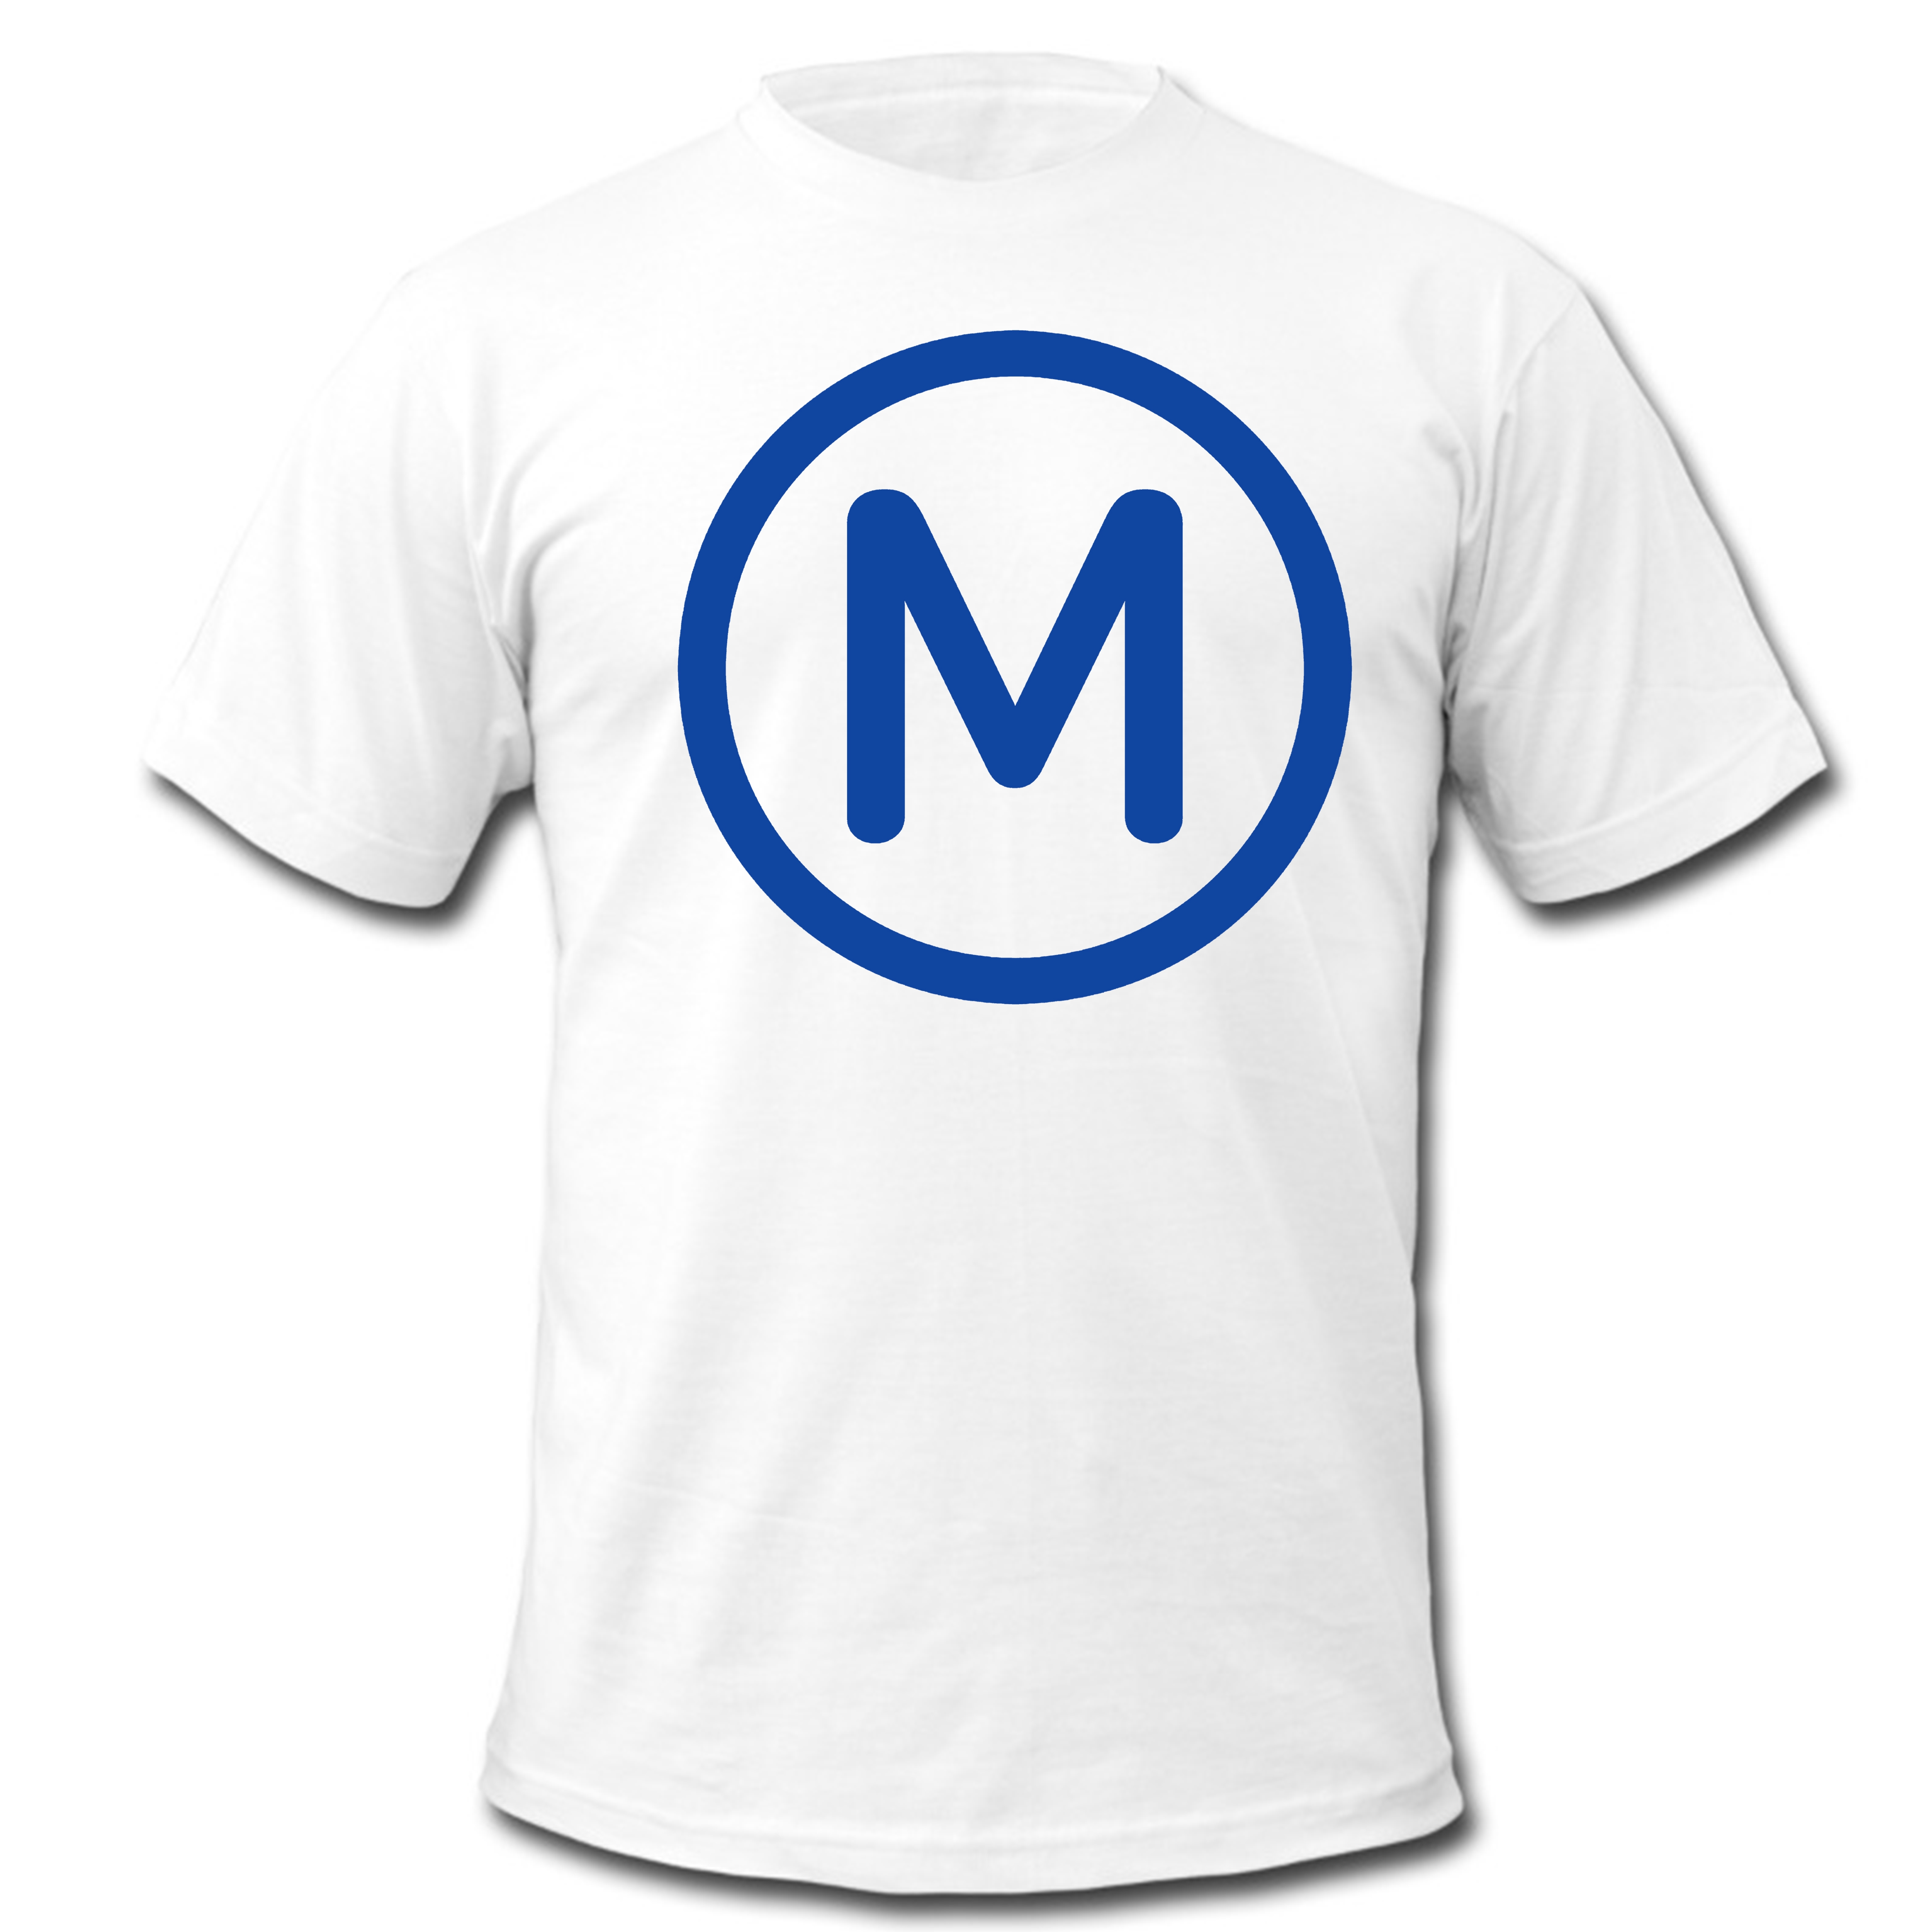 tee shirt "Metro " blanc logo bleu de barbes wear sur Scredboutique.com